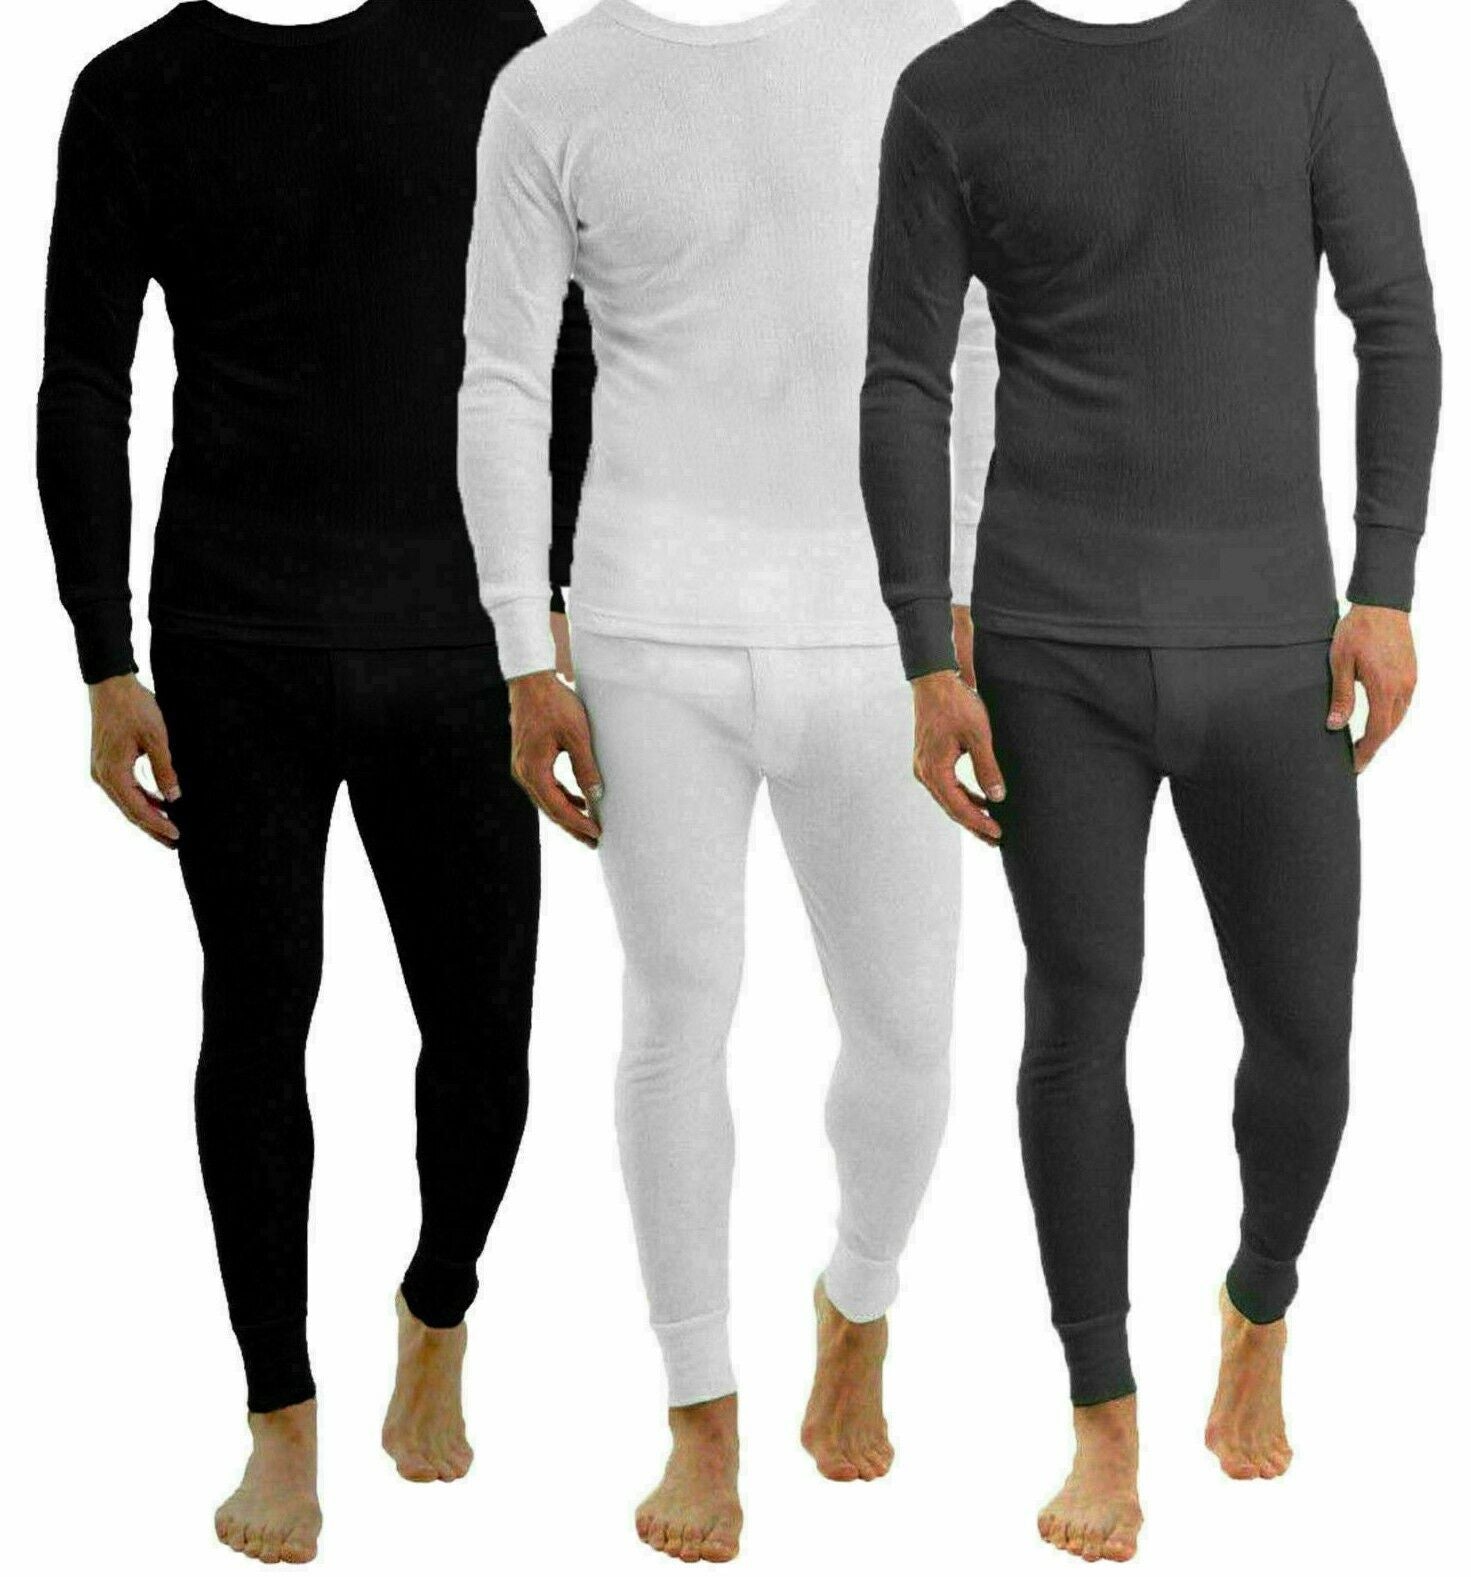 Mens Thermal Long Johns Short & Long Sleeve T-Shirts Bottom Warm Underwear Basel - Comfyfit ltd